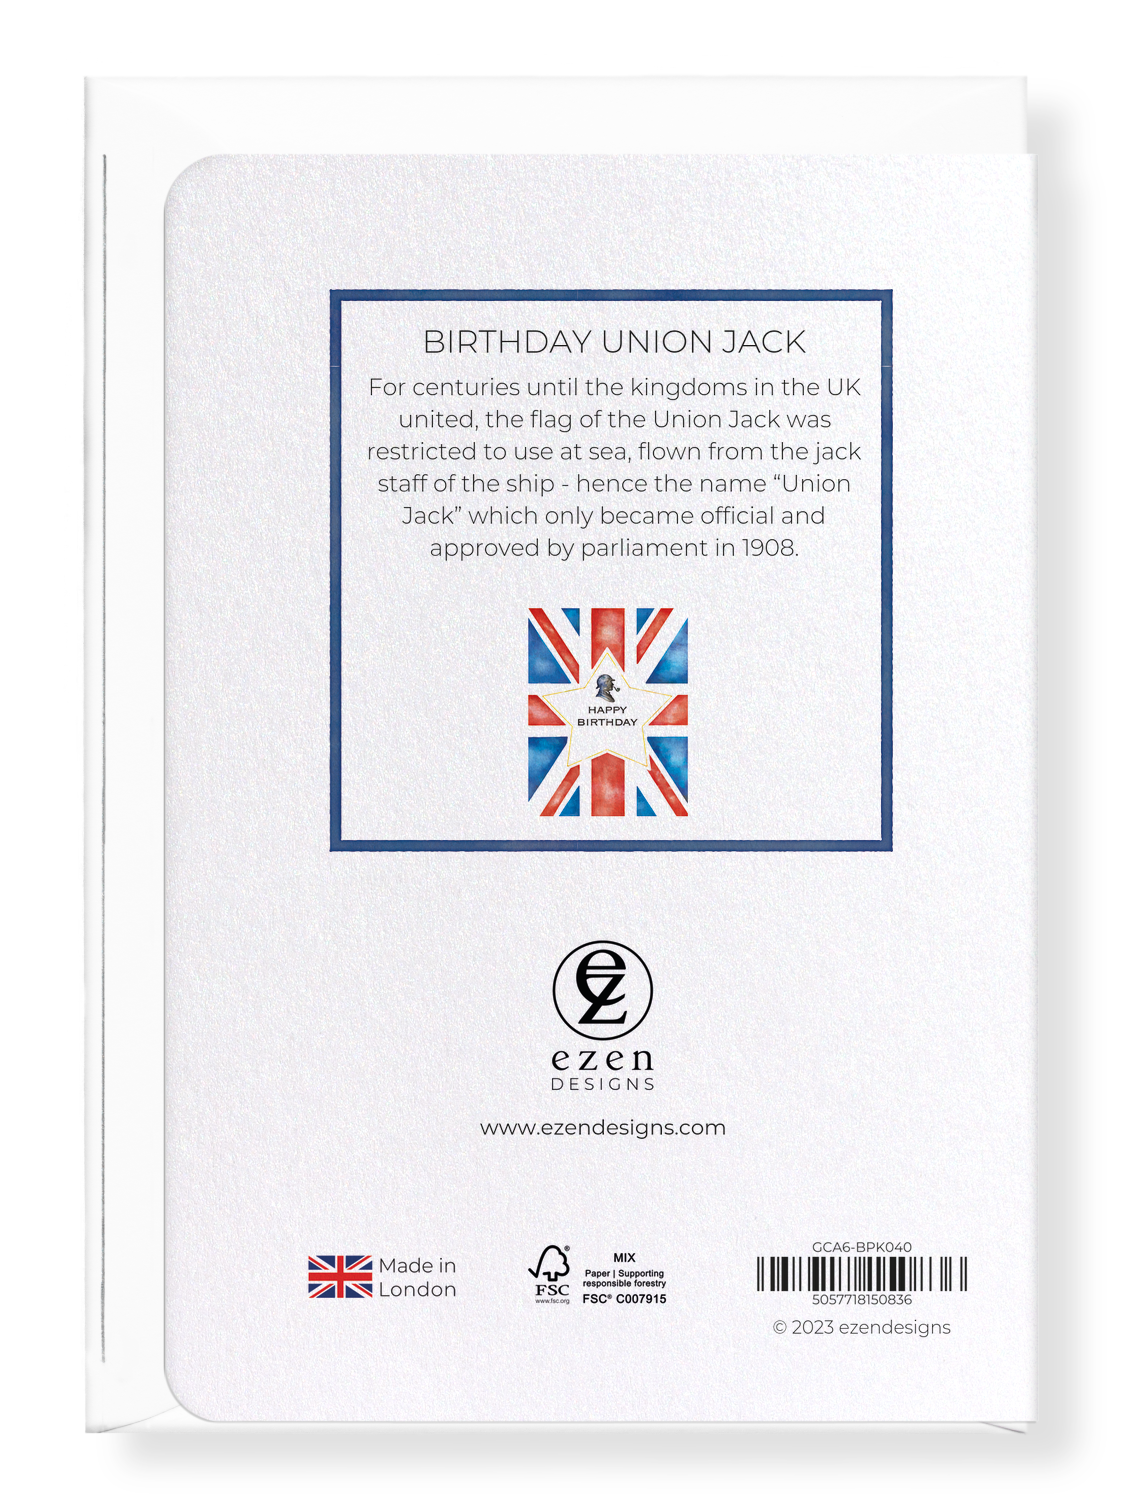 Ezen Designs - Birthday Union Jack - Greeting Card - Back